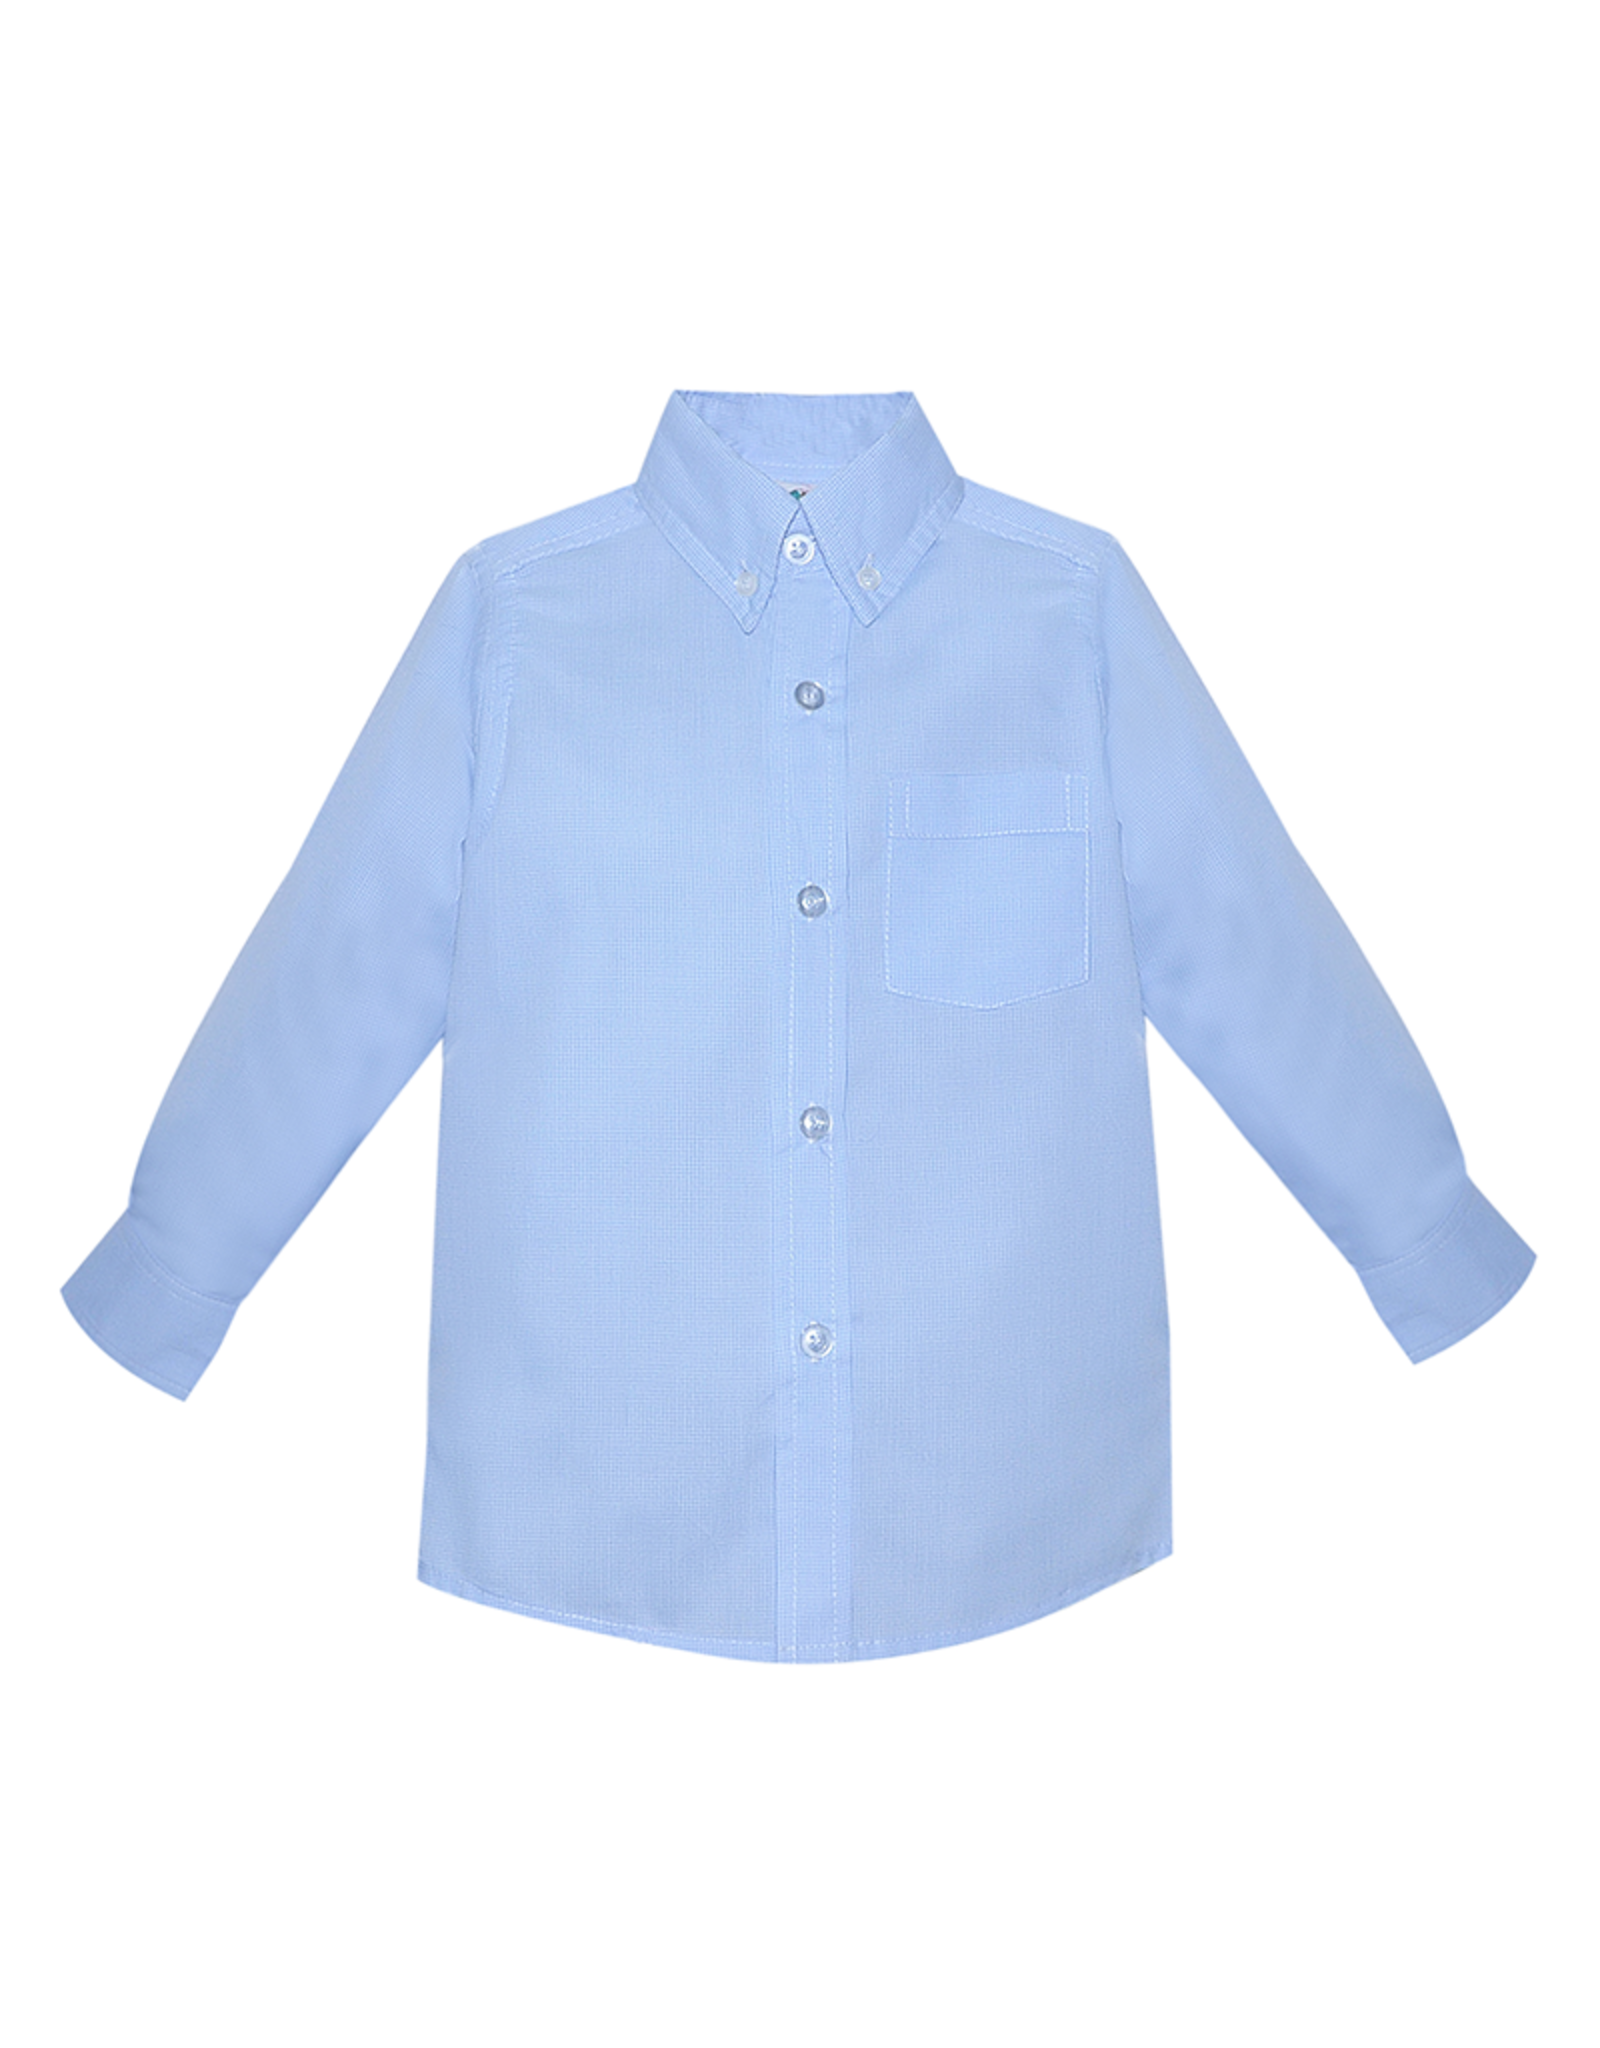 Remember Nguyen ABSHT Button Down Shirt Light Blue Micro Gingham